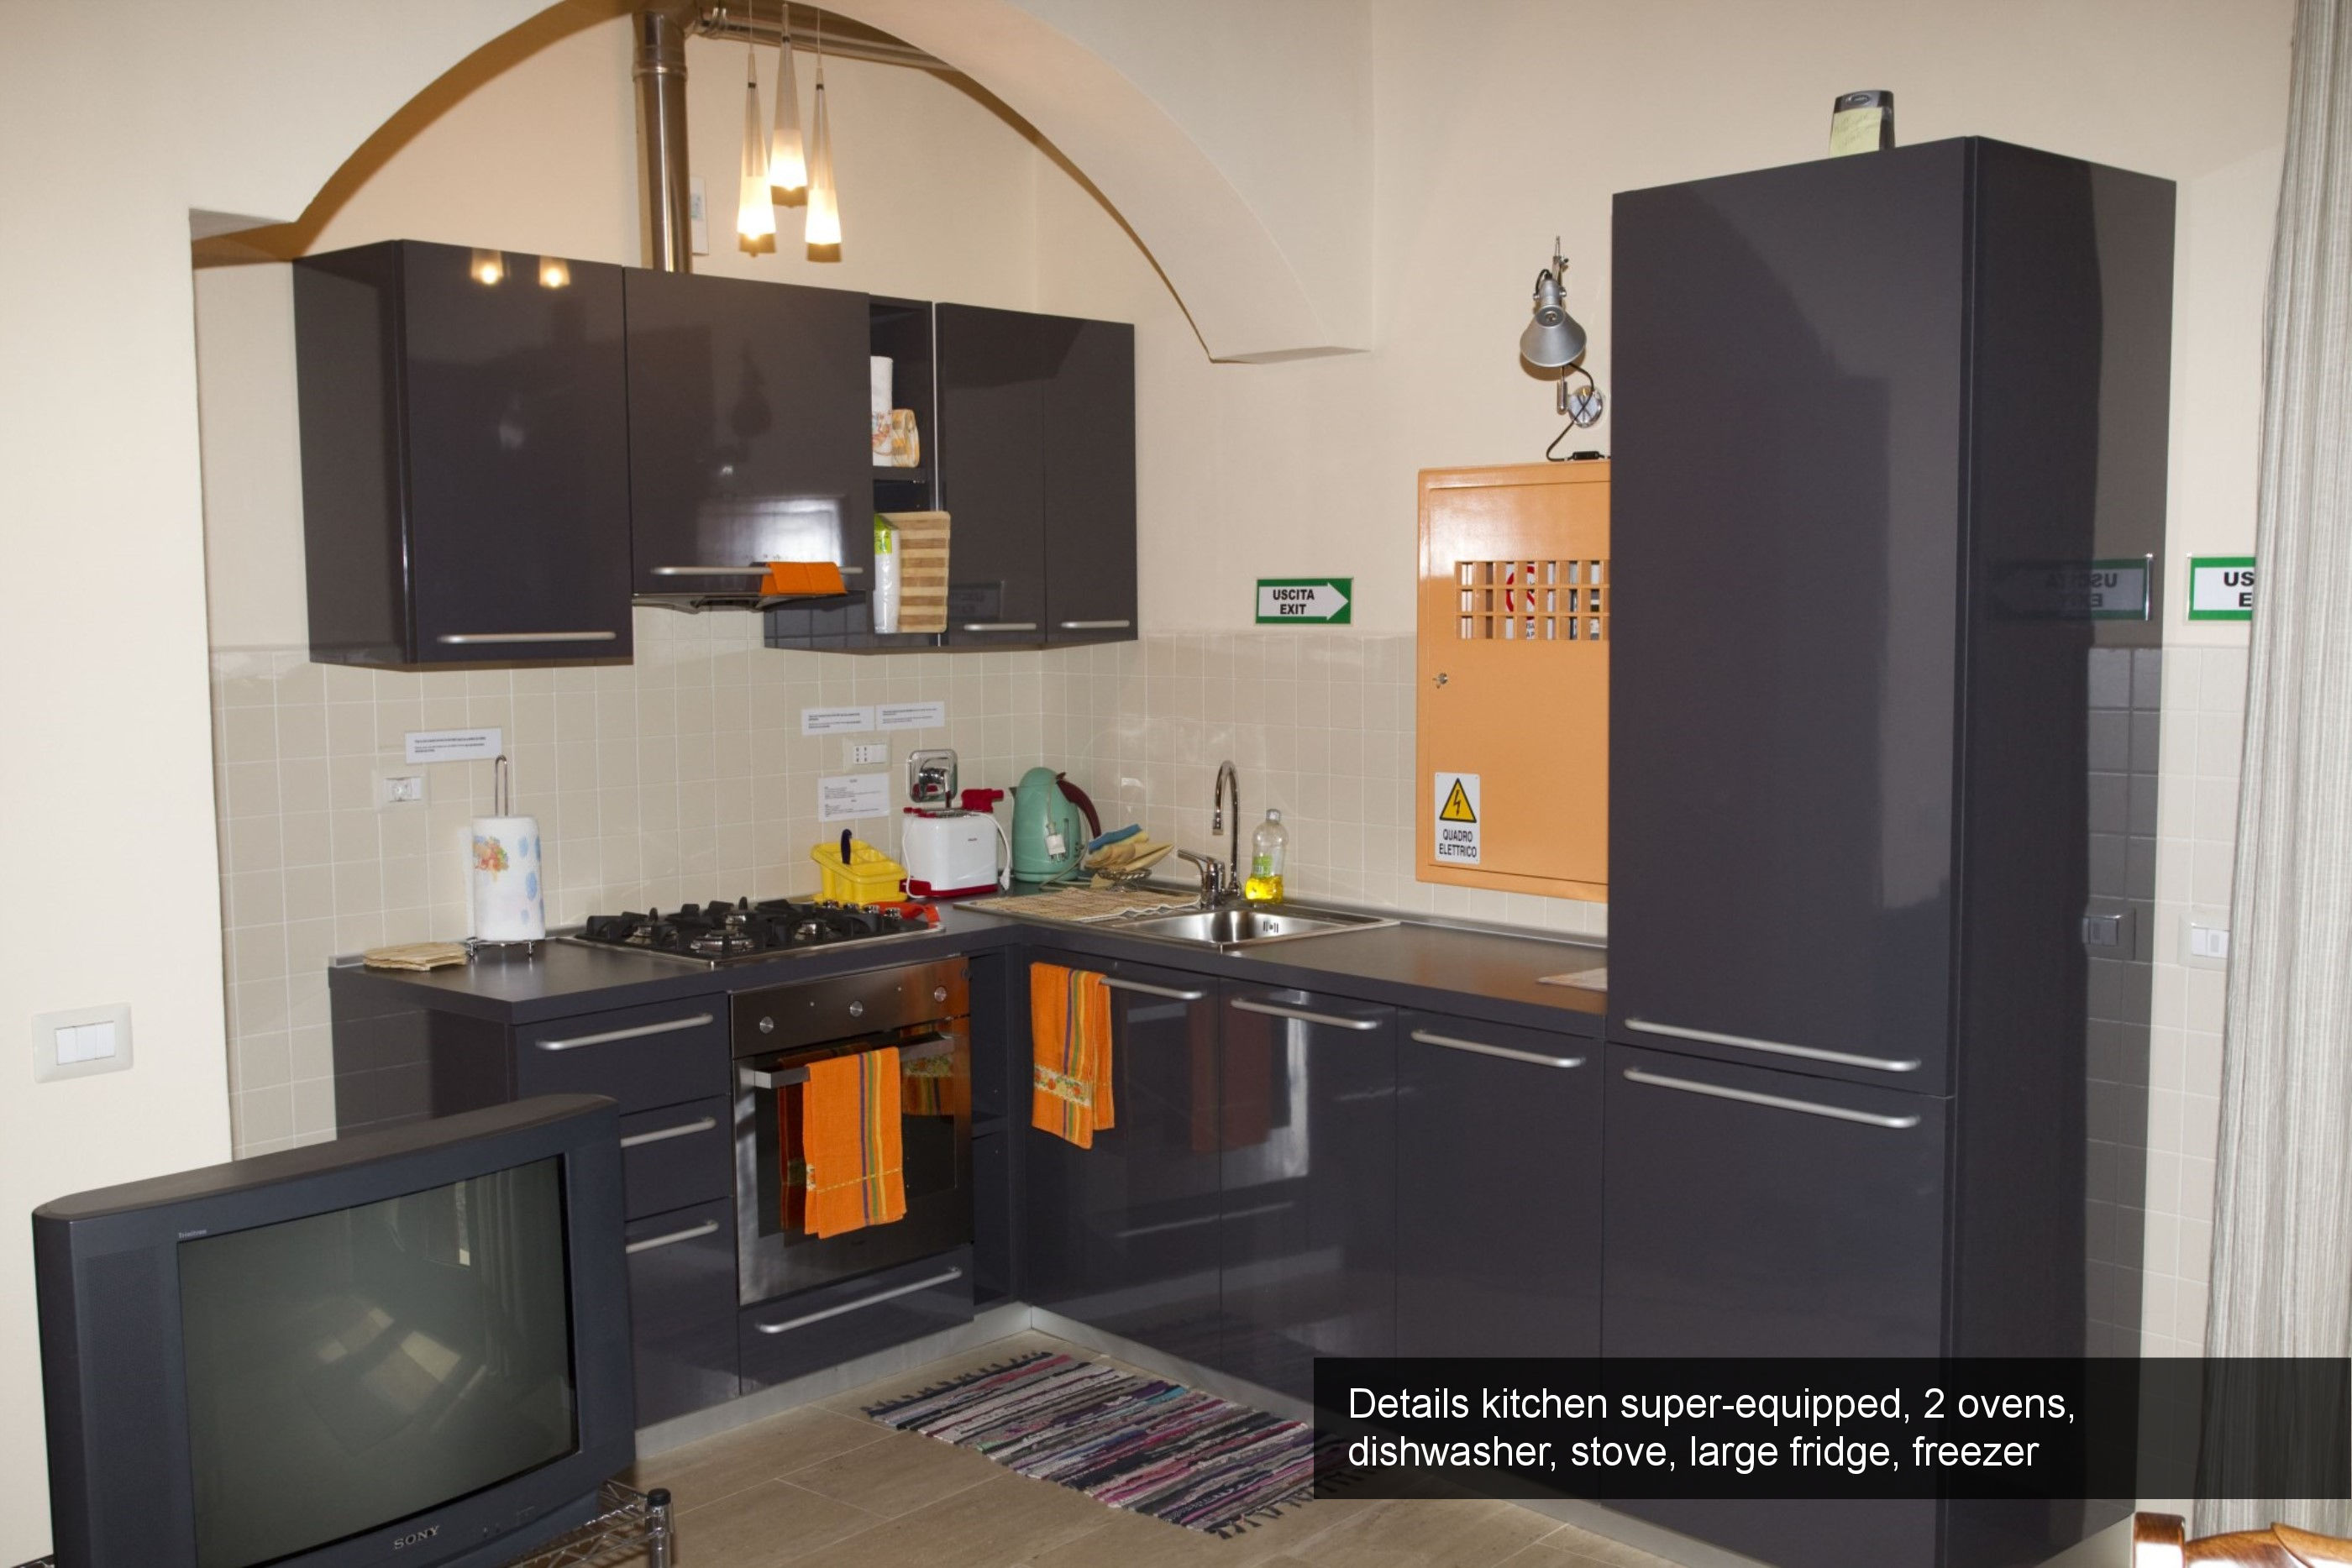 5) details kitchen super-equipped, 2 ovens, dishwasher, stove, large fri...